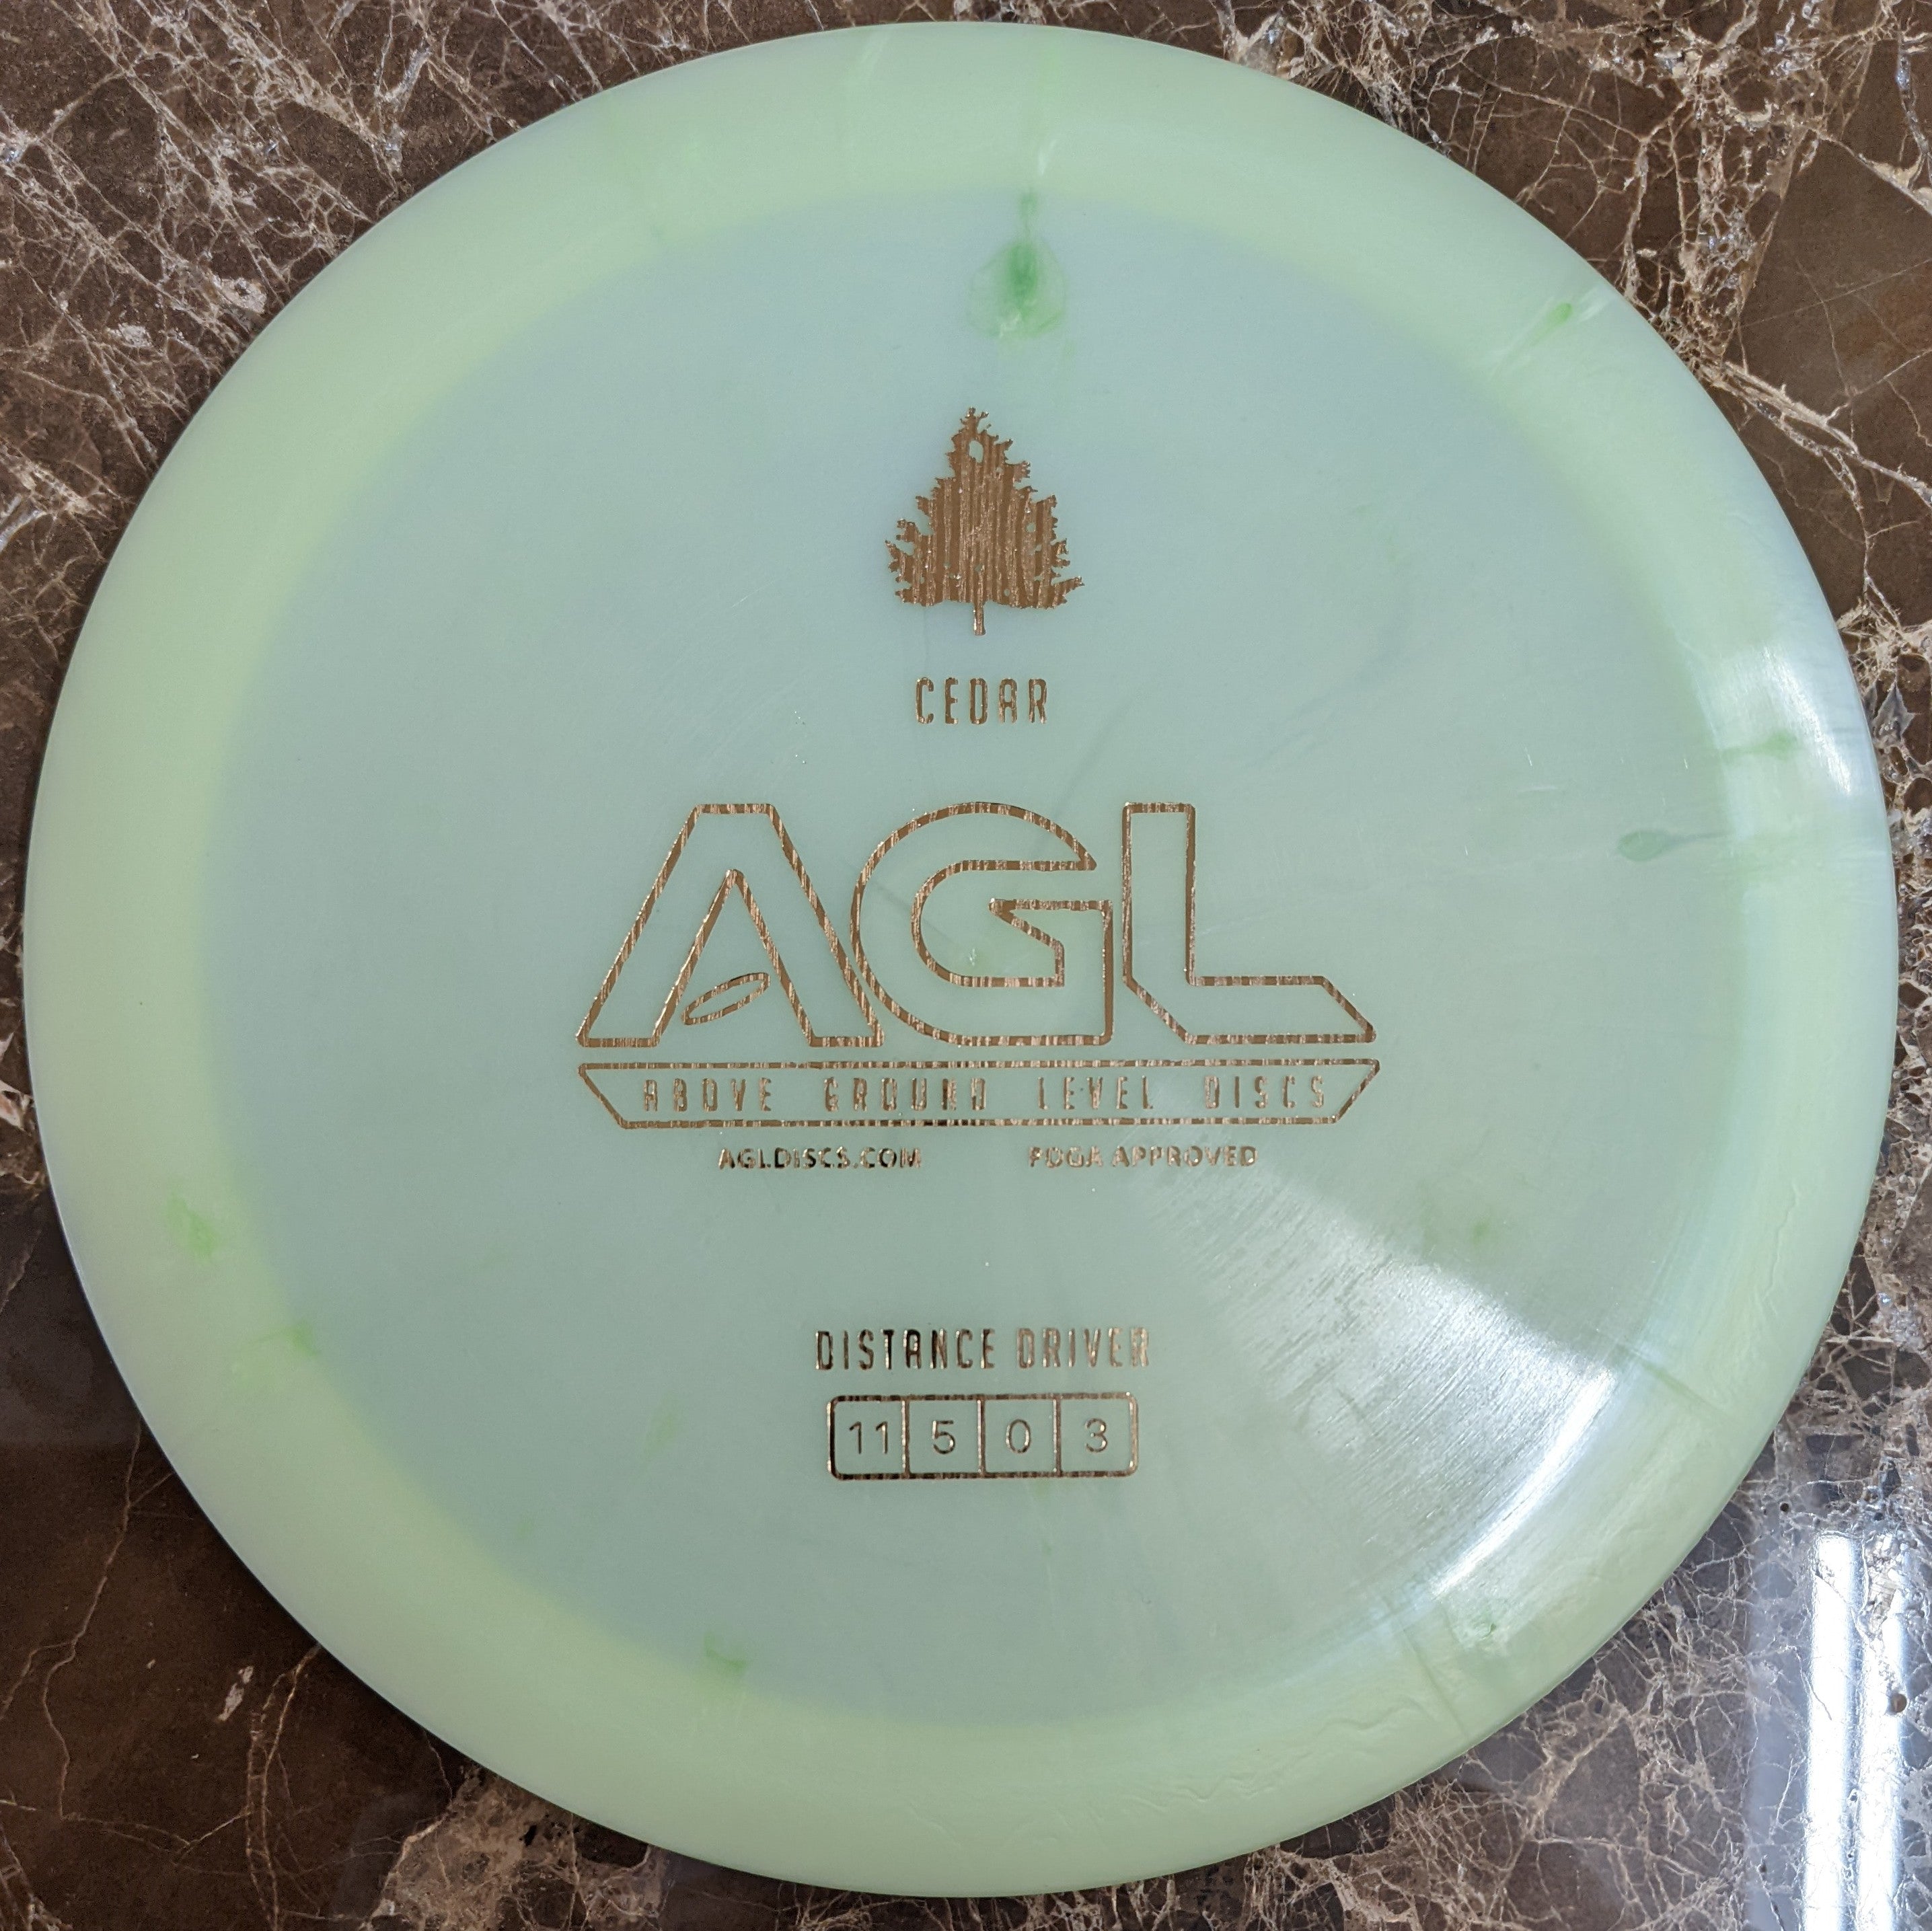 AGL Discs - AGL Patches (OE Circle Design w/ 5 Colors)